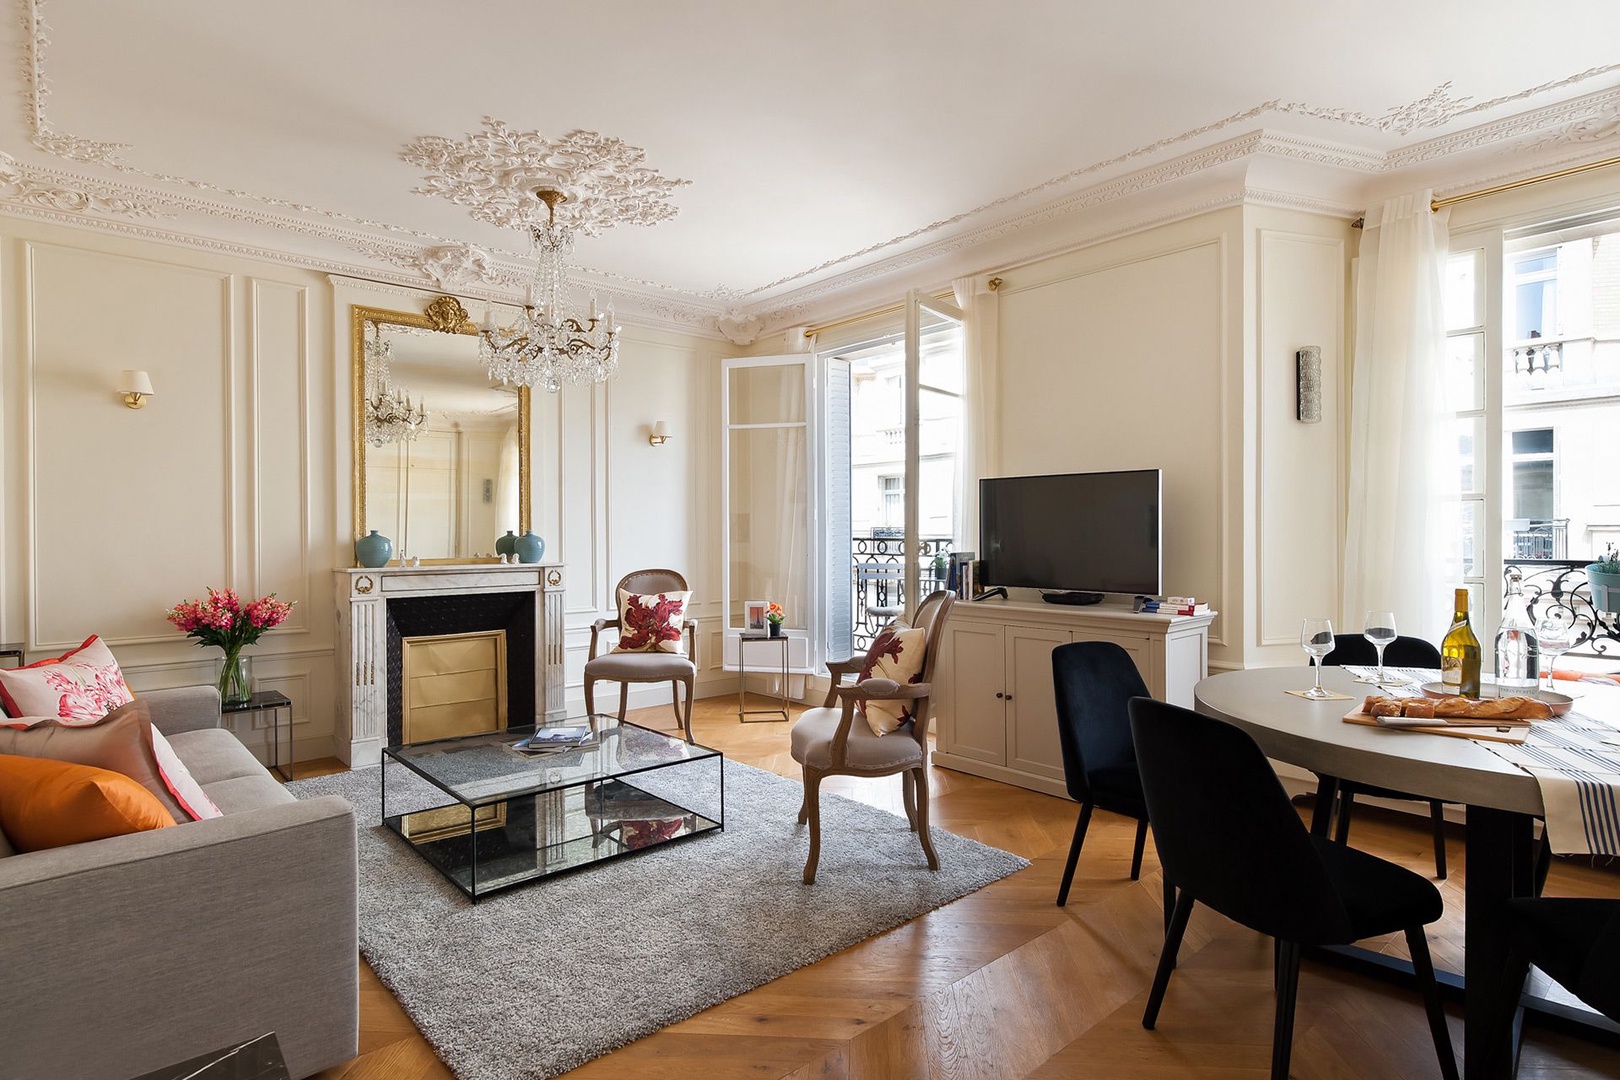 Welcome to our charming Aloxe Paris apartment!